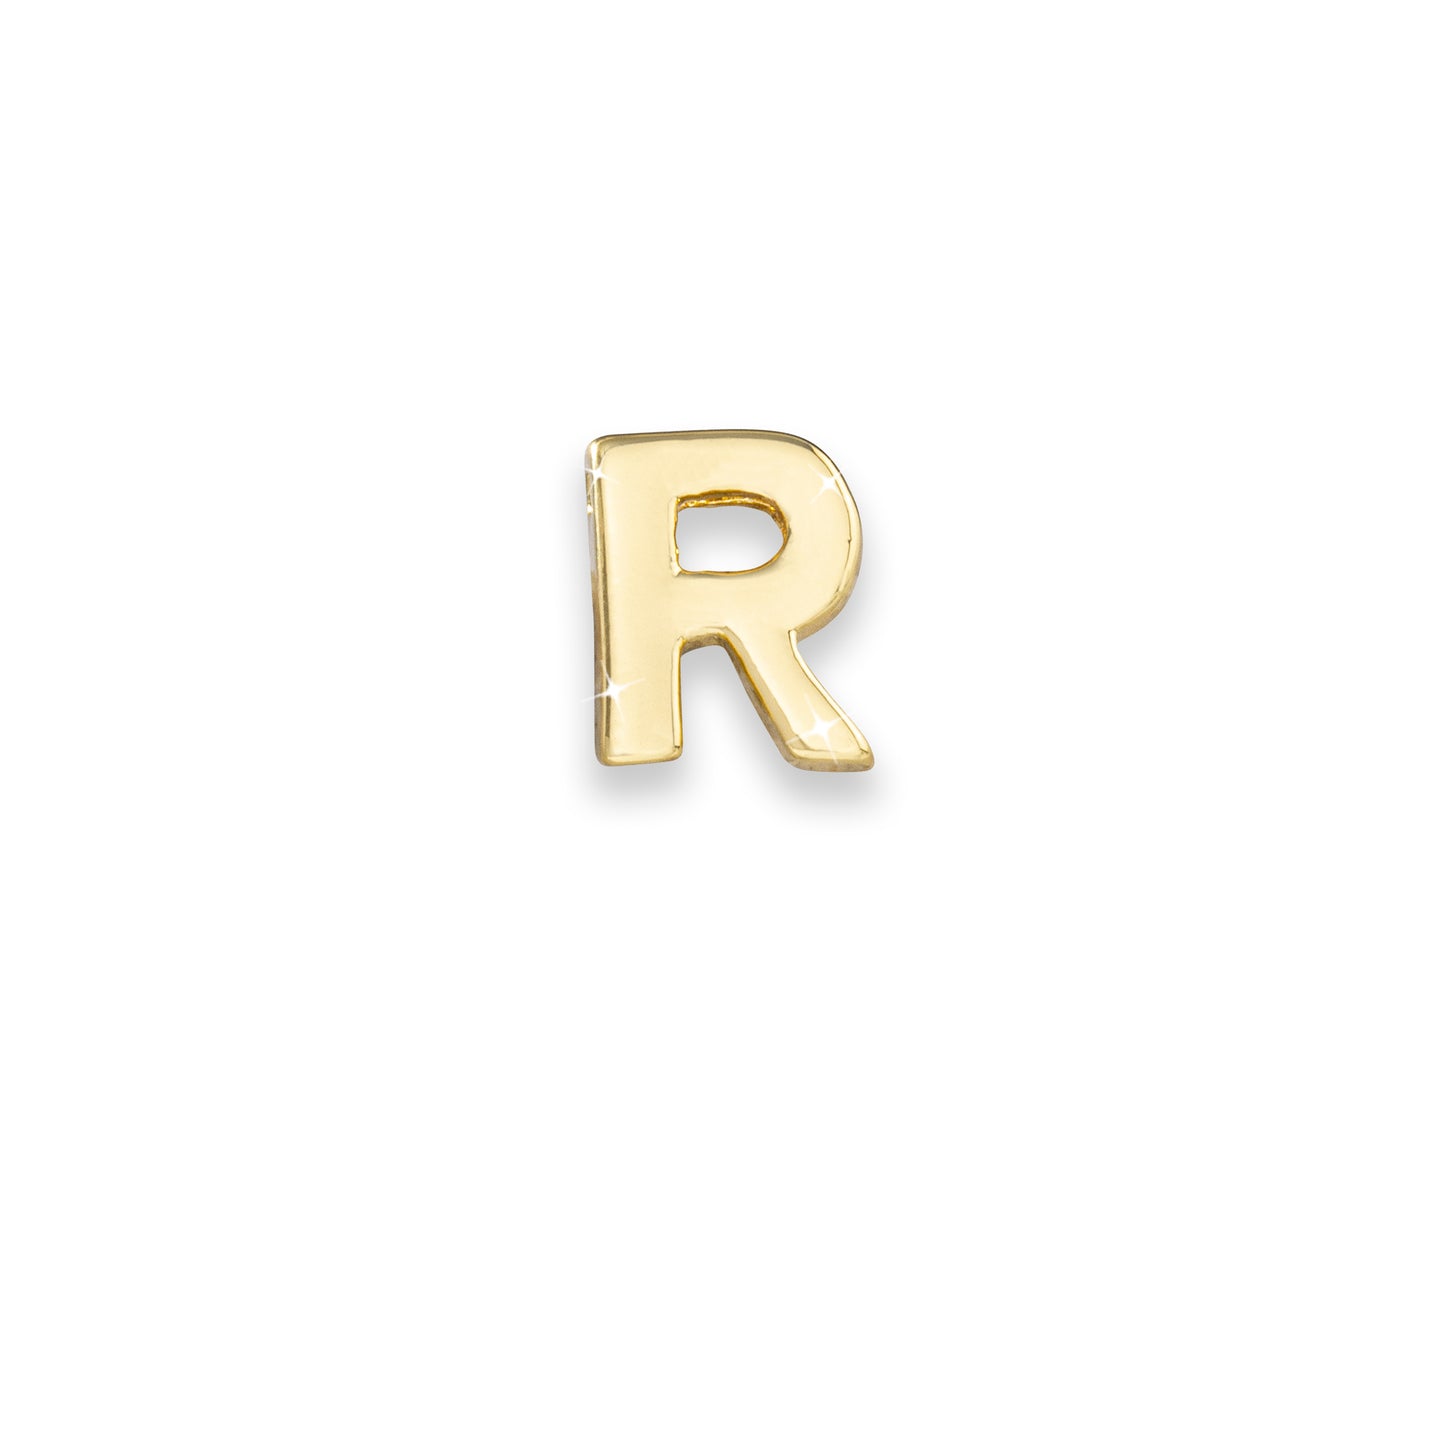 Gold letter R monogram charm for necklaces & bracelets